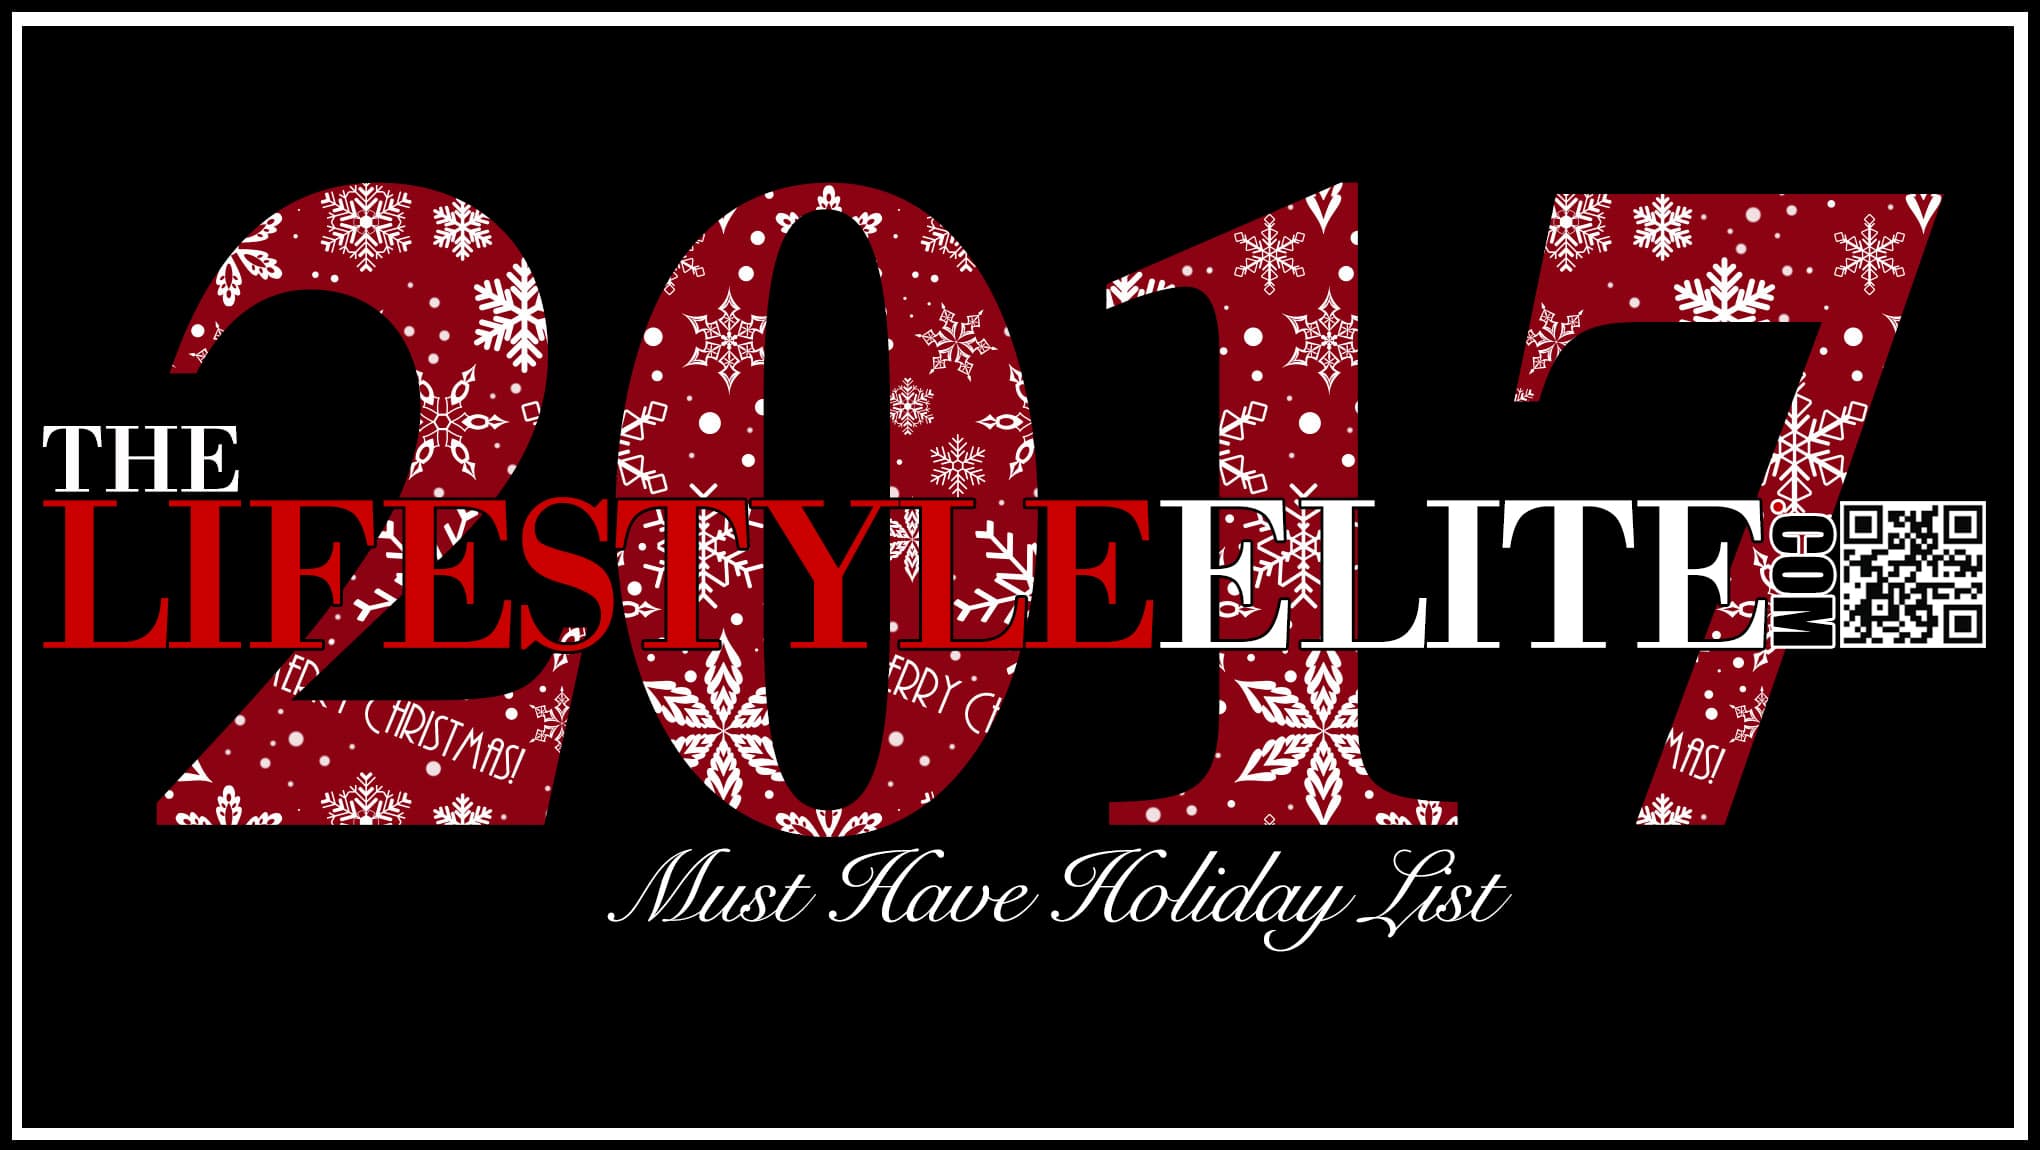 holiday gift guide,cheyan antwaune gray, cheyan gray, antwaune gray, thelifestyleelite,elite lifestyle, thelifestyleelitedotcom, thelifestyleelite.com,tlselite.com,TheLifeStyleElite.com,cheyan antwaune gray,fashion,models of thelifestyleelite.com, the life style elite,the lifestyle elite,elite lifestyle,lifestyleelite.com,cheyan gray,TLSElite,TLSElite.com,TLSEliteGaming,TLSElite Gaming